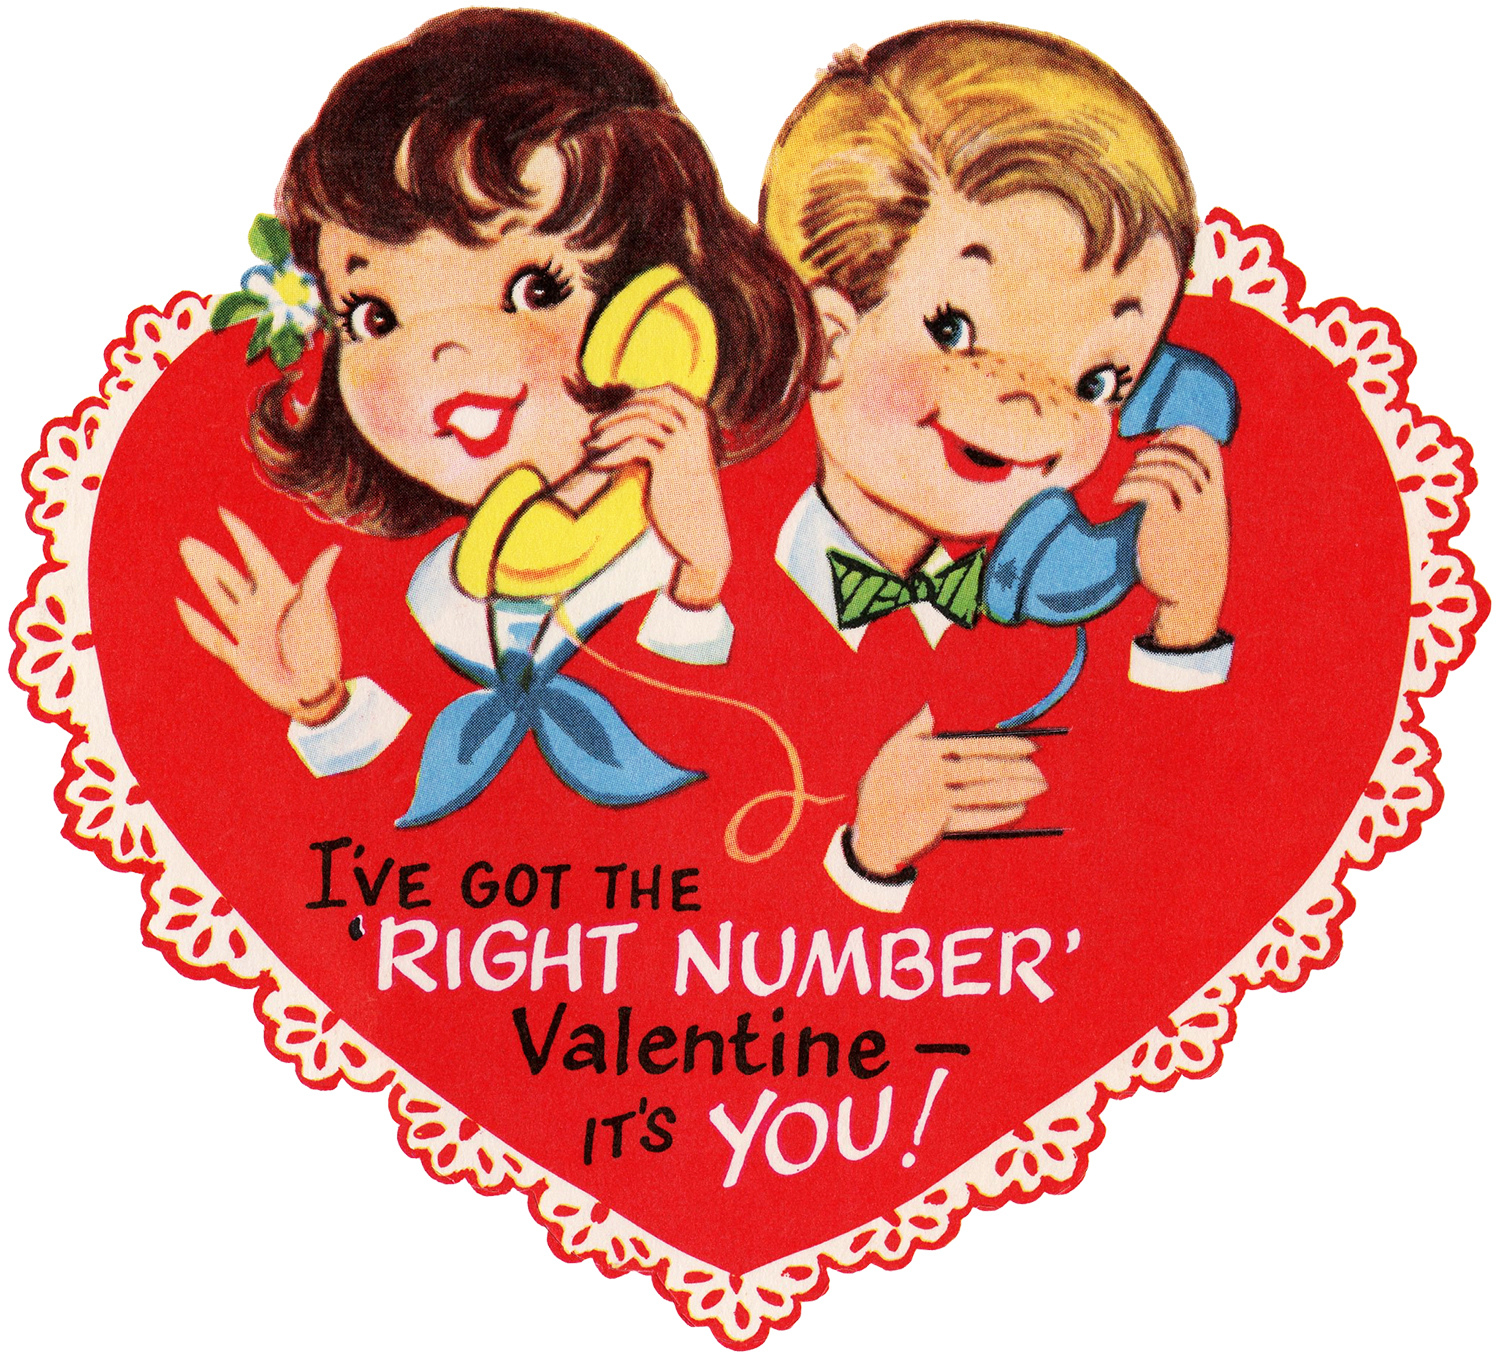 Retro Valentines with Children on Telephone Picture